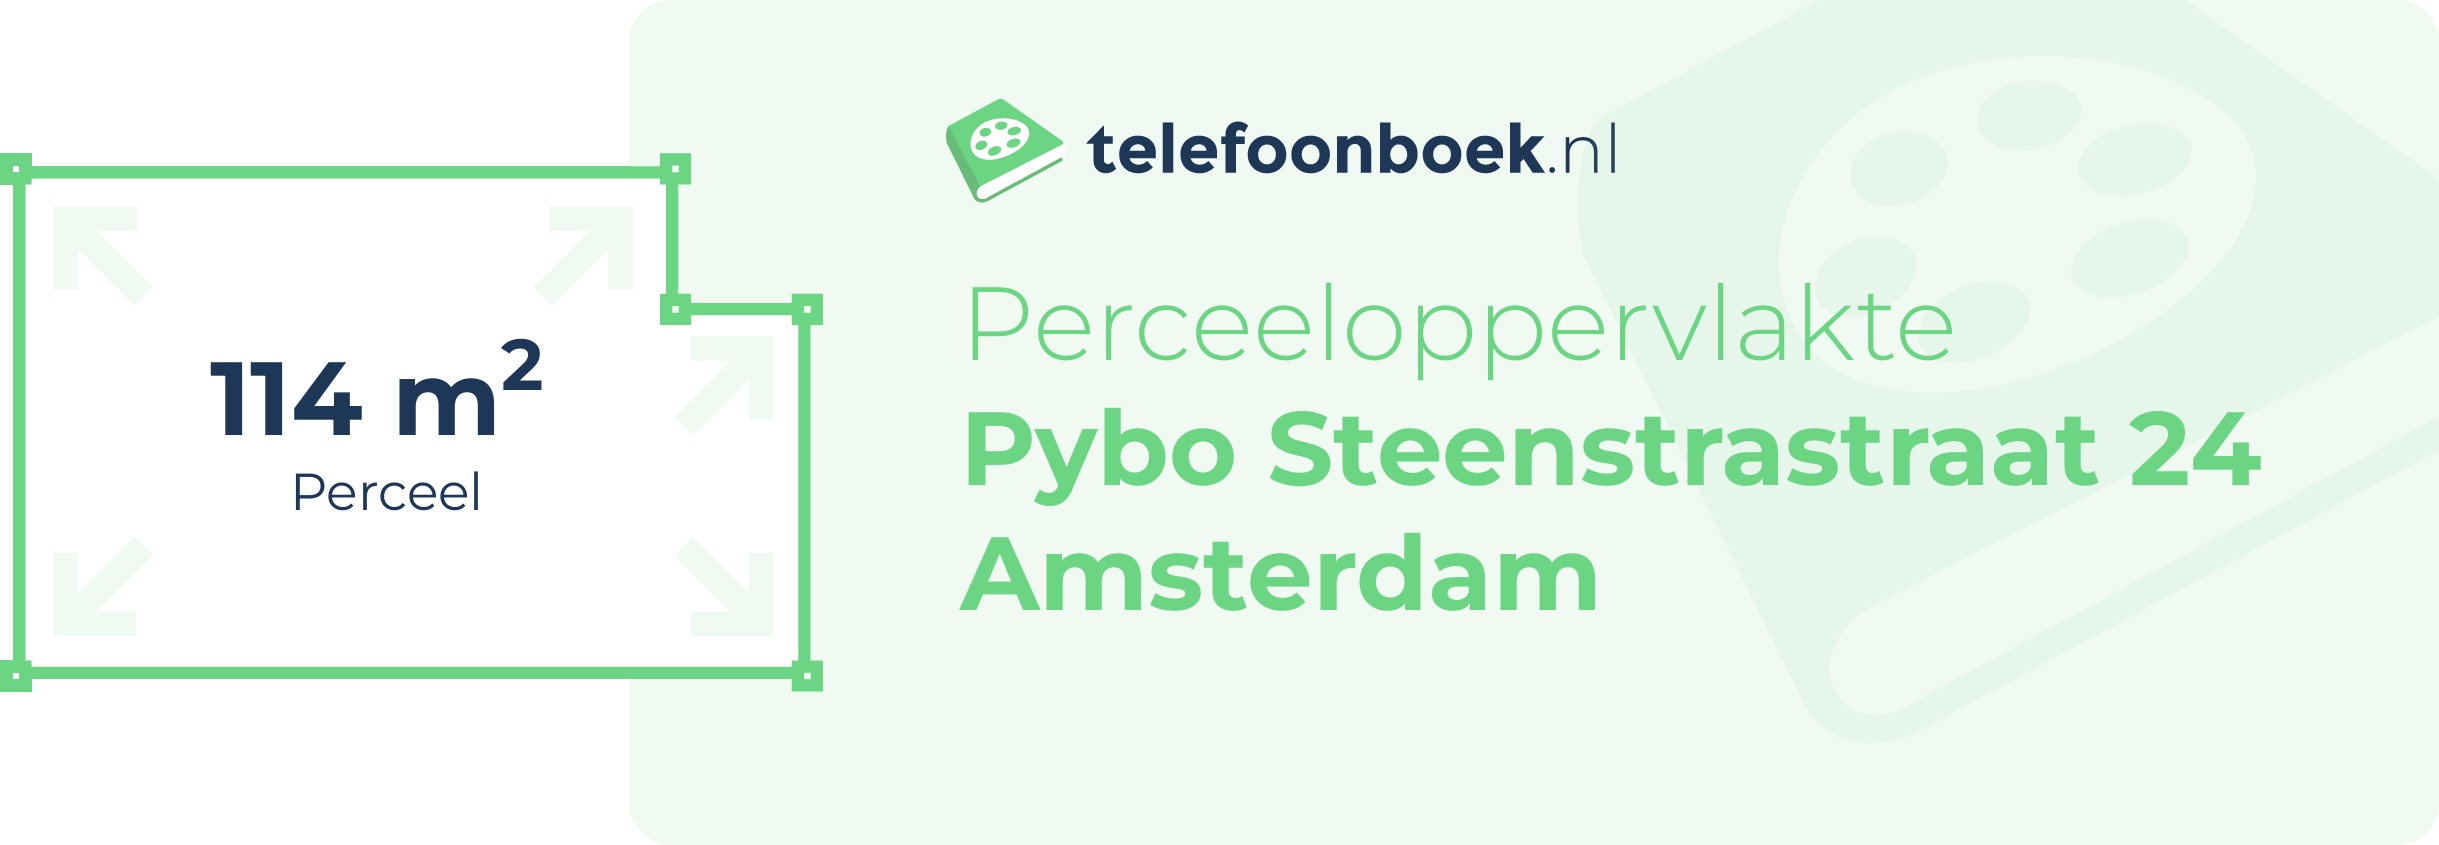 Perceeloppervlakte Pybo Steenstrastraat 24 Amsterdam